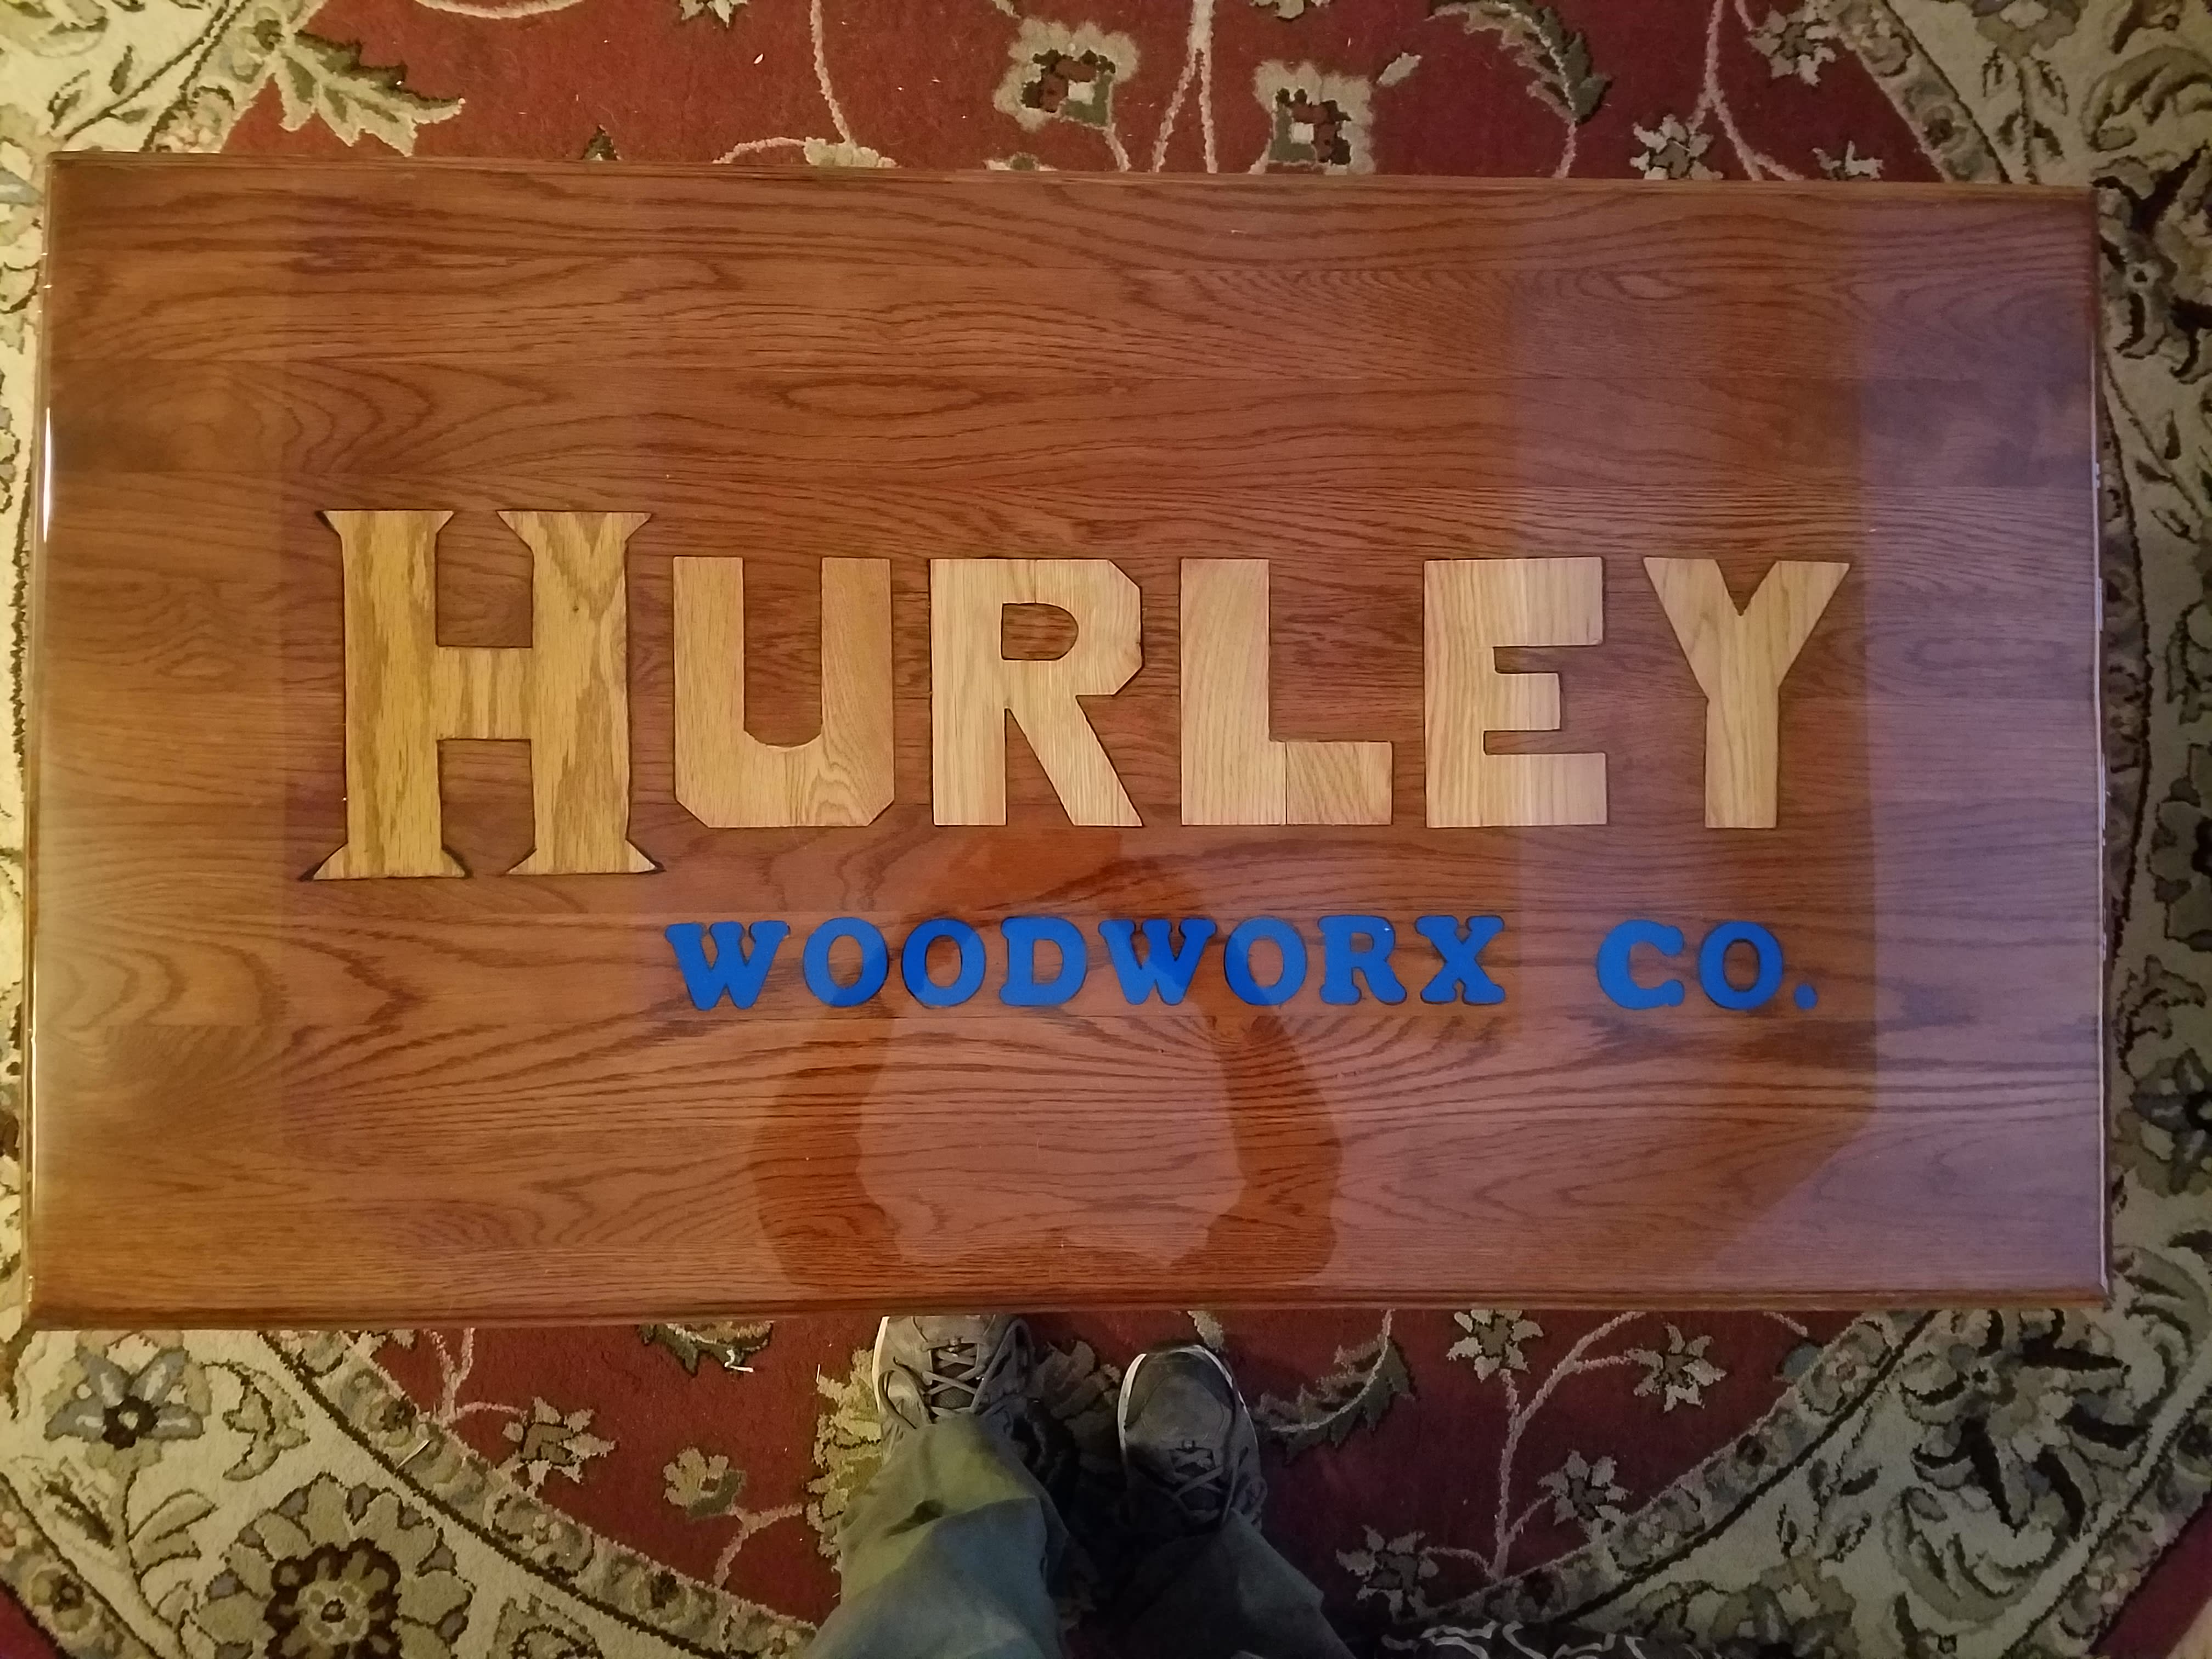 Hurley Woodworx Co.